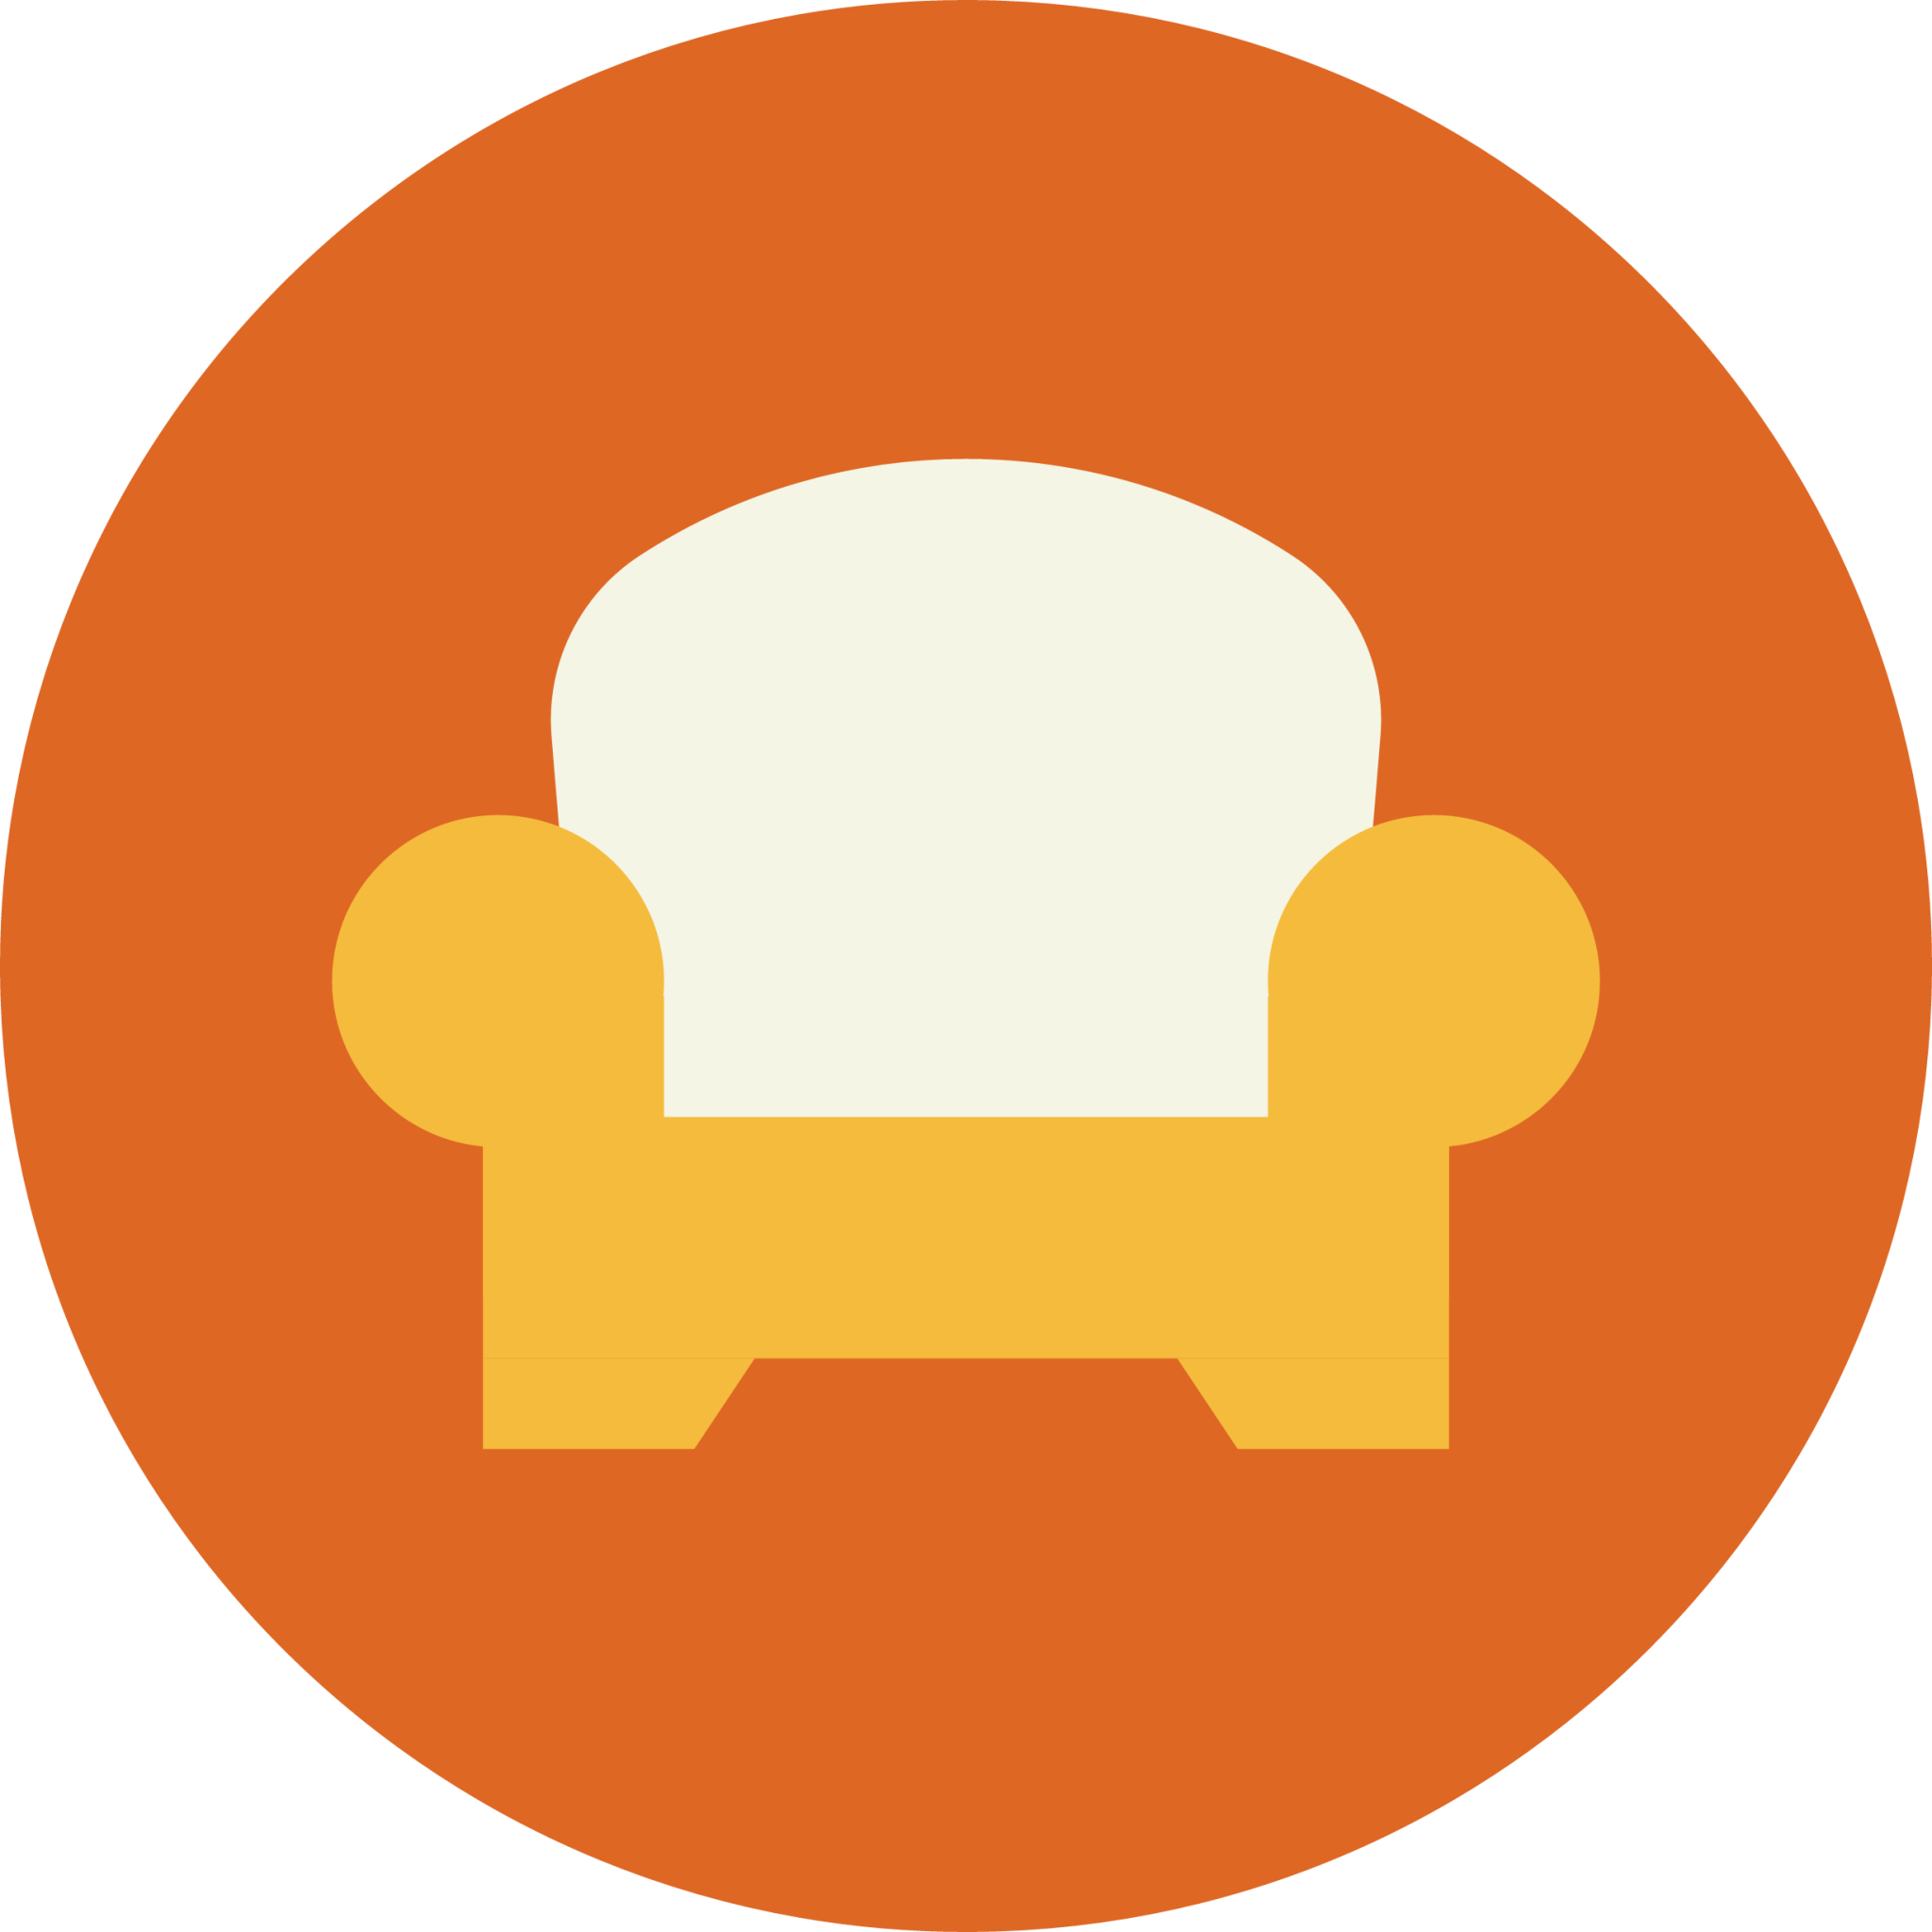 couch chair sofa orange icon